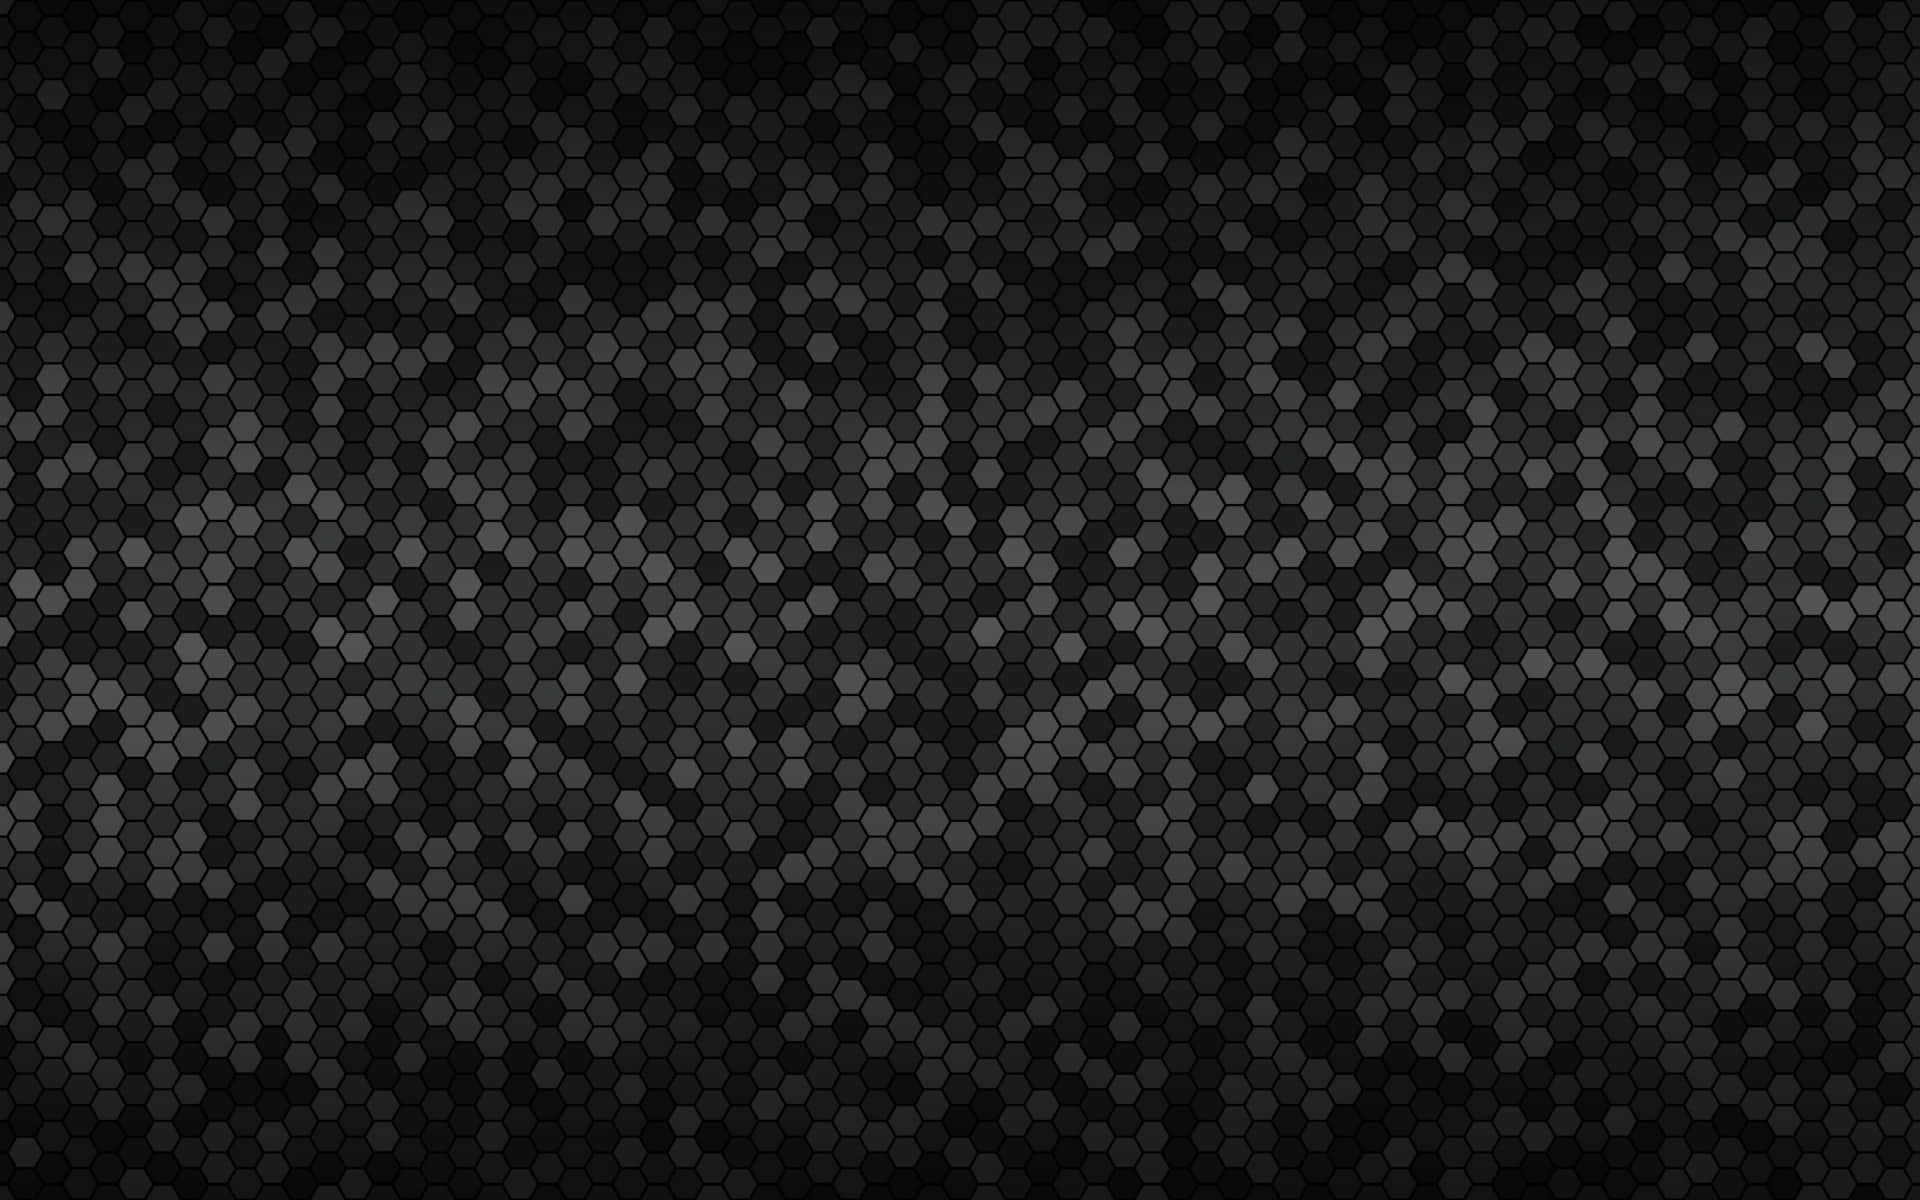 A sleek black pattern background